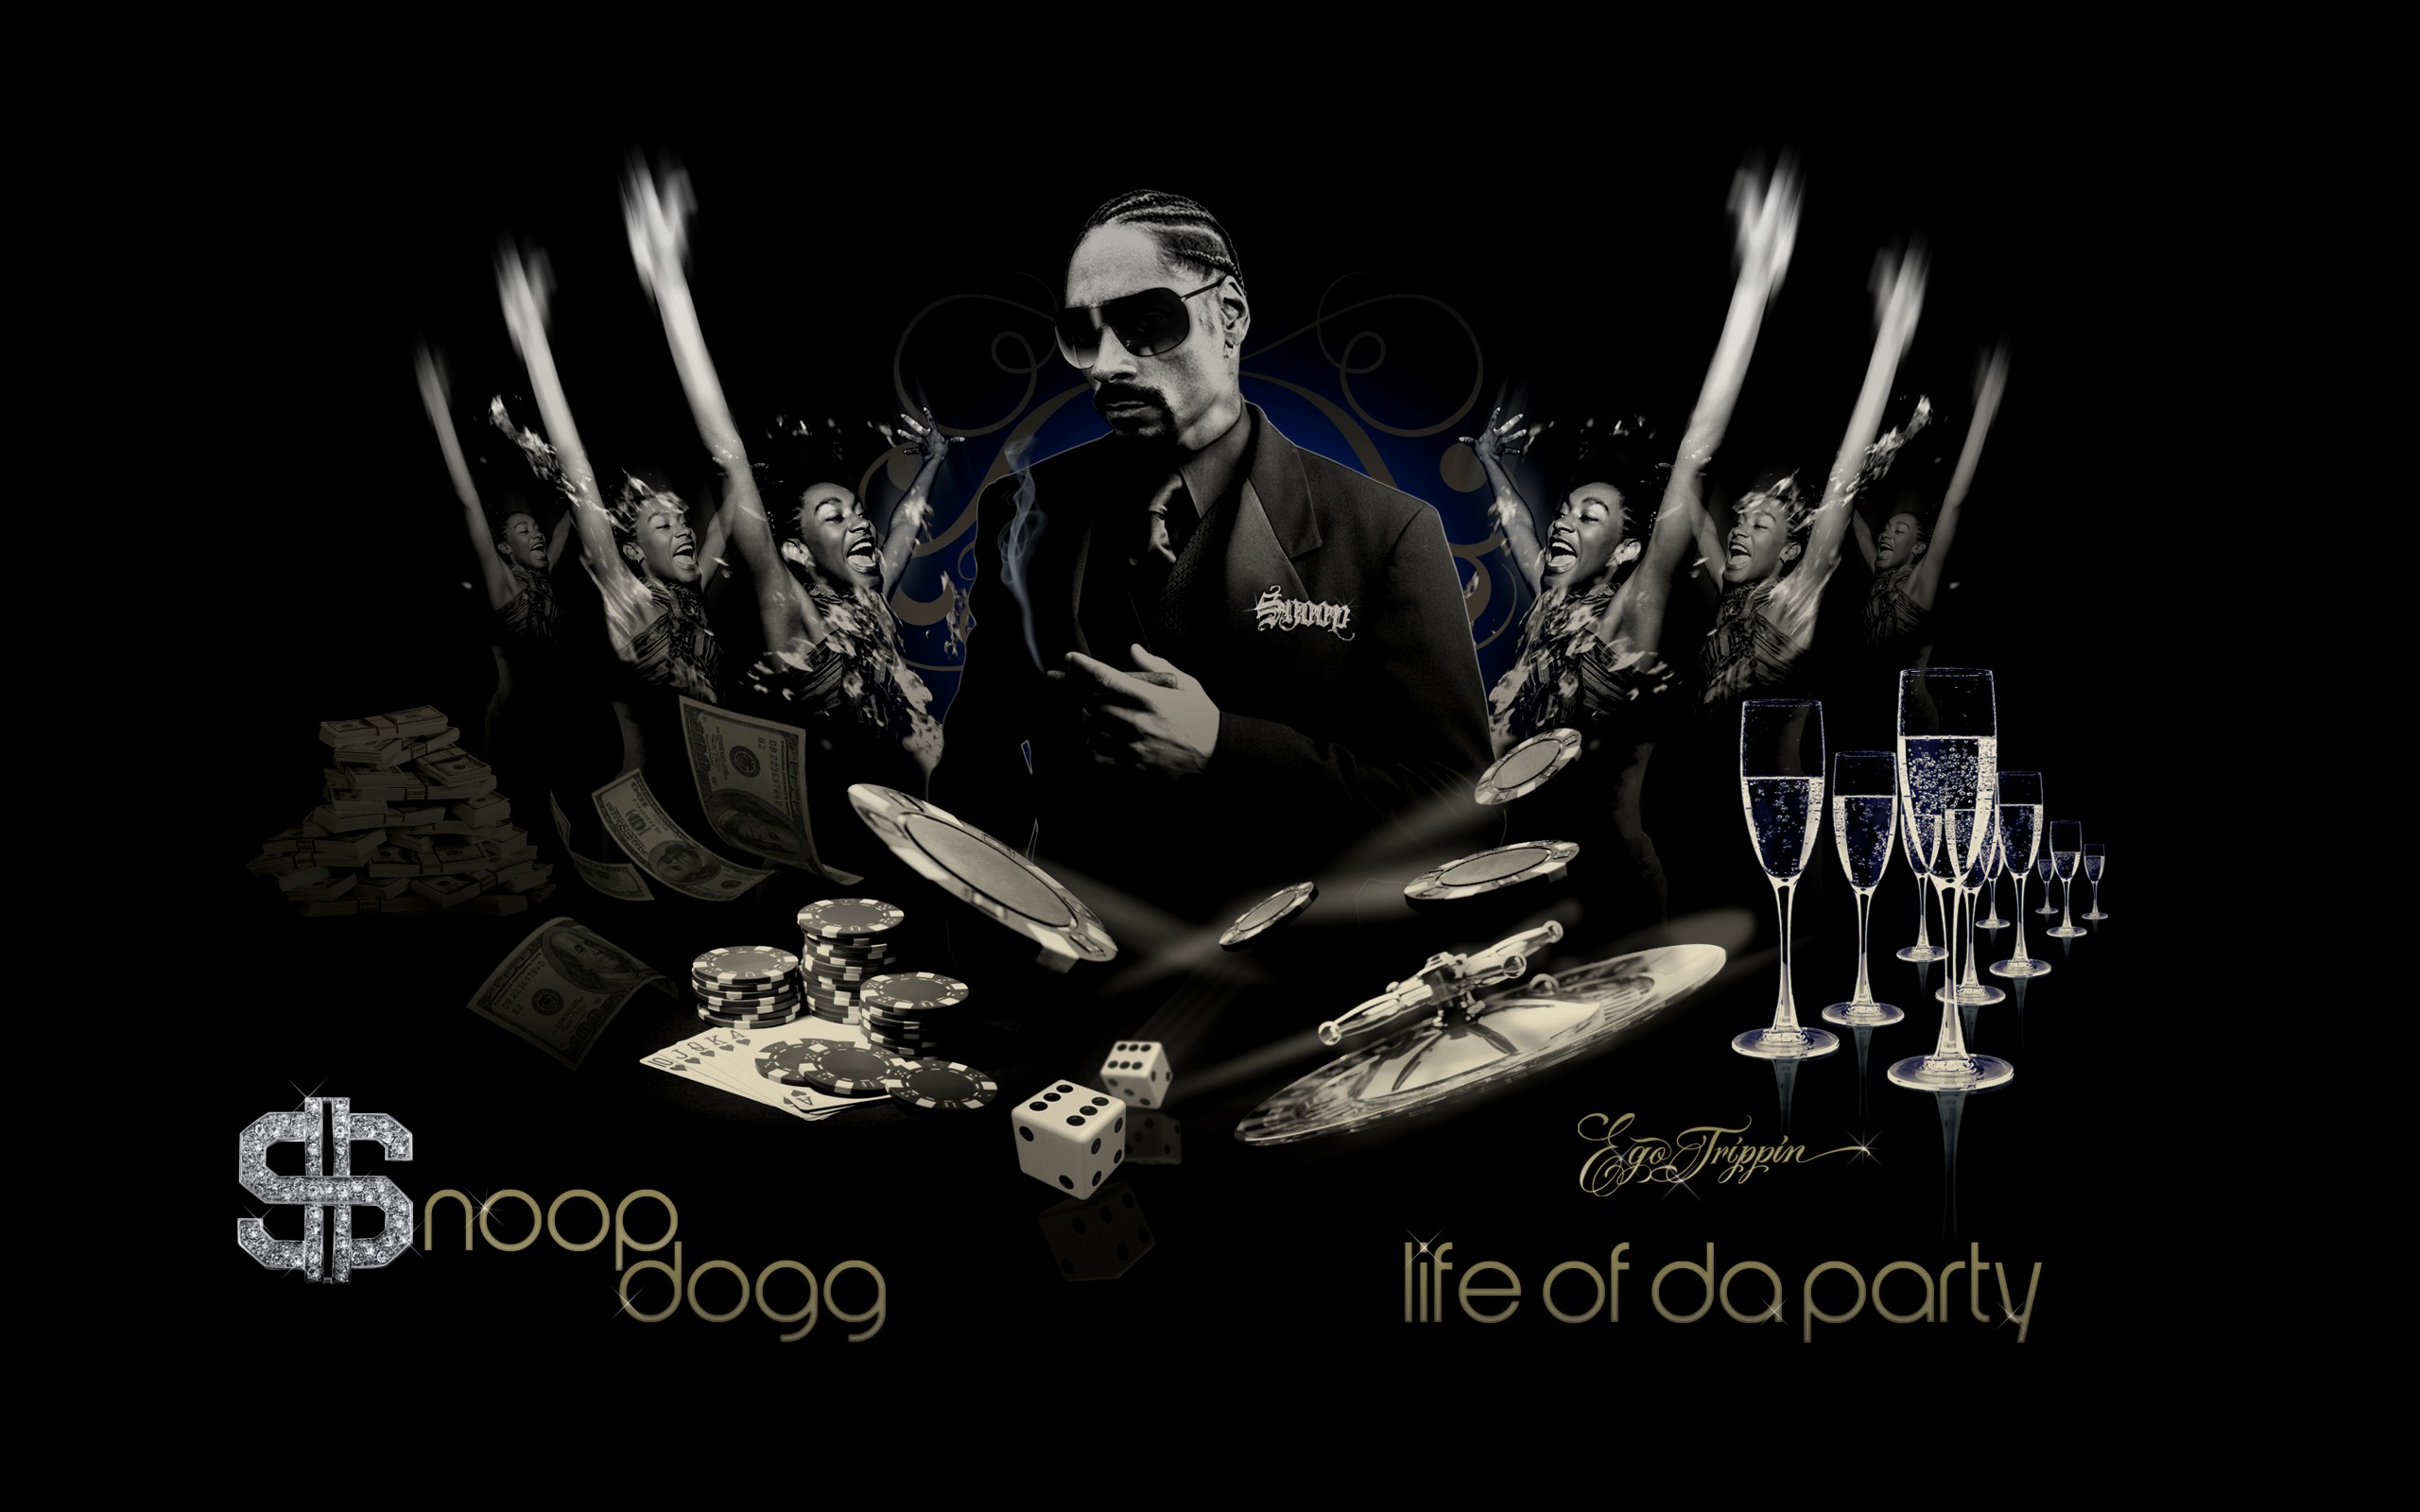 Dogg Wallpapers Free Gangsta Life Snoop Dogg HD Wallpapers Gangsta